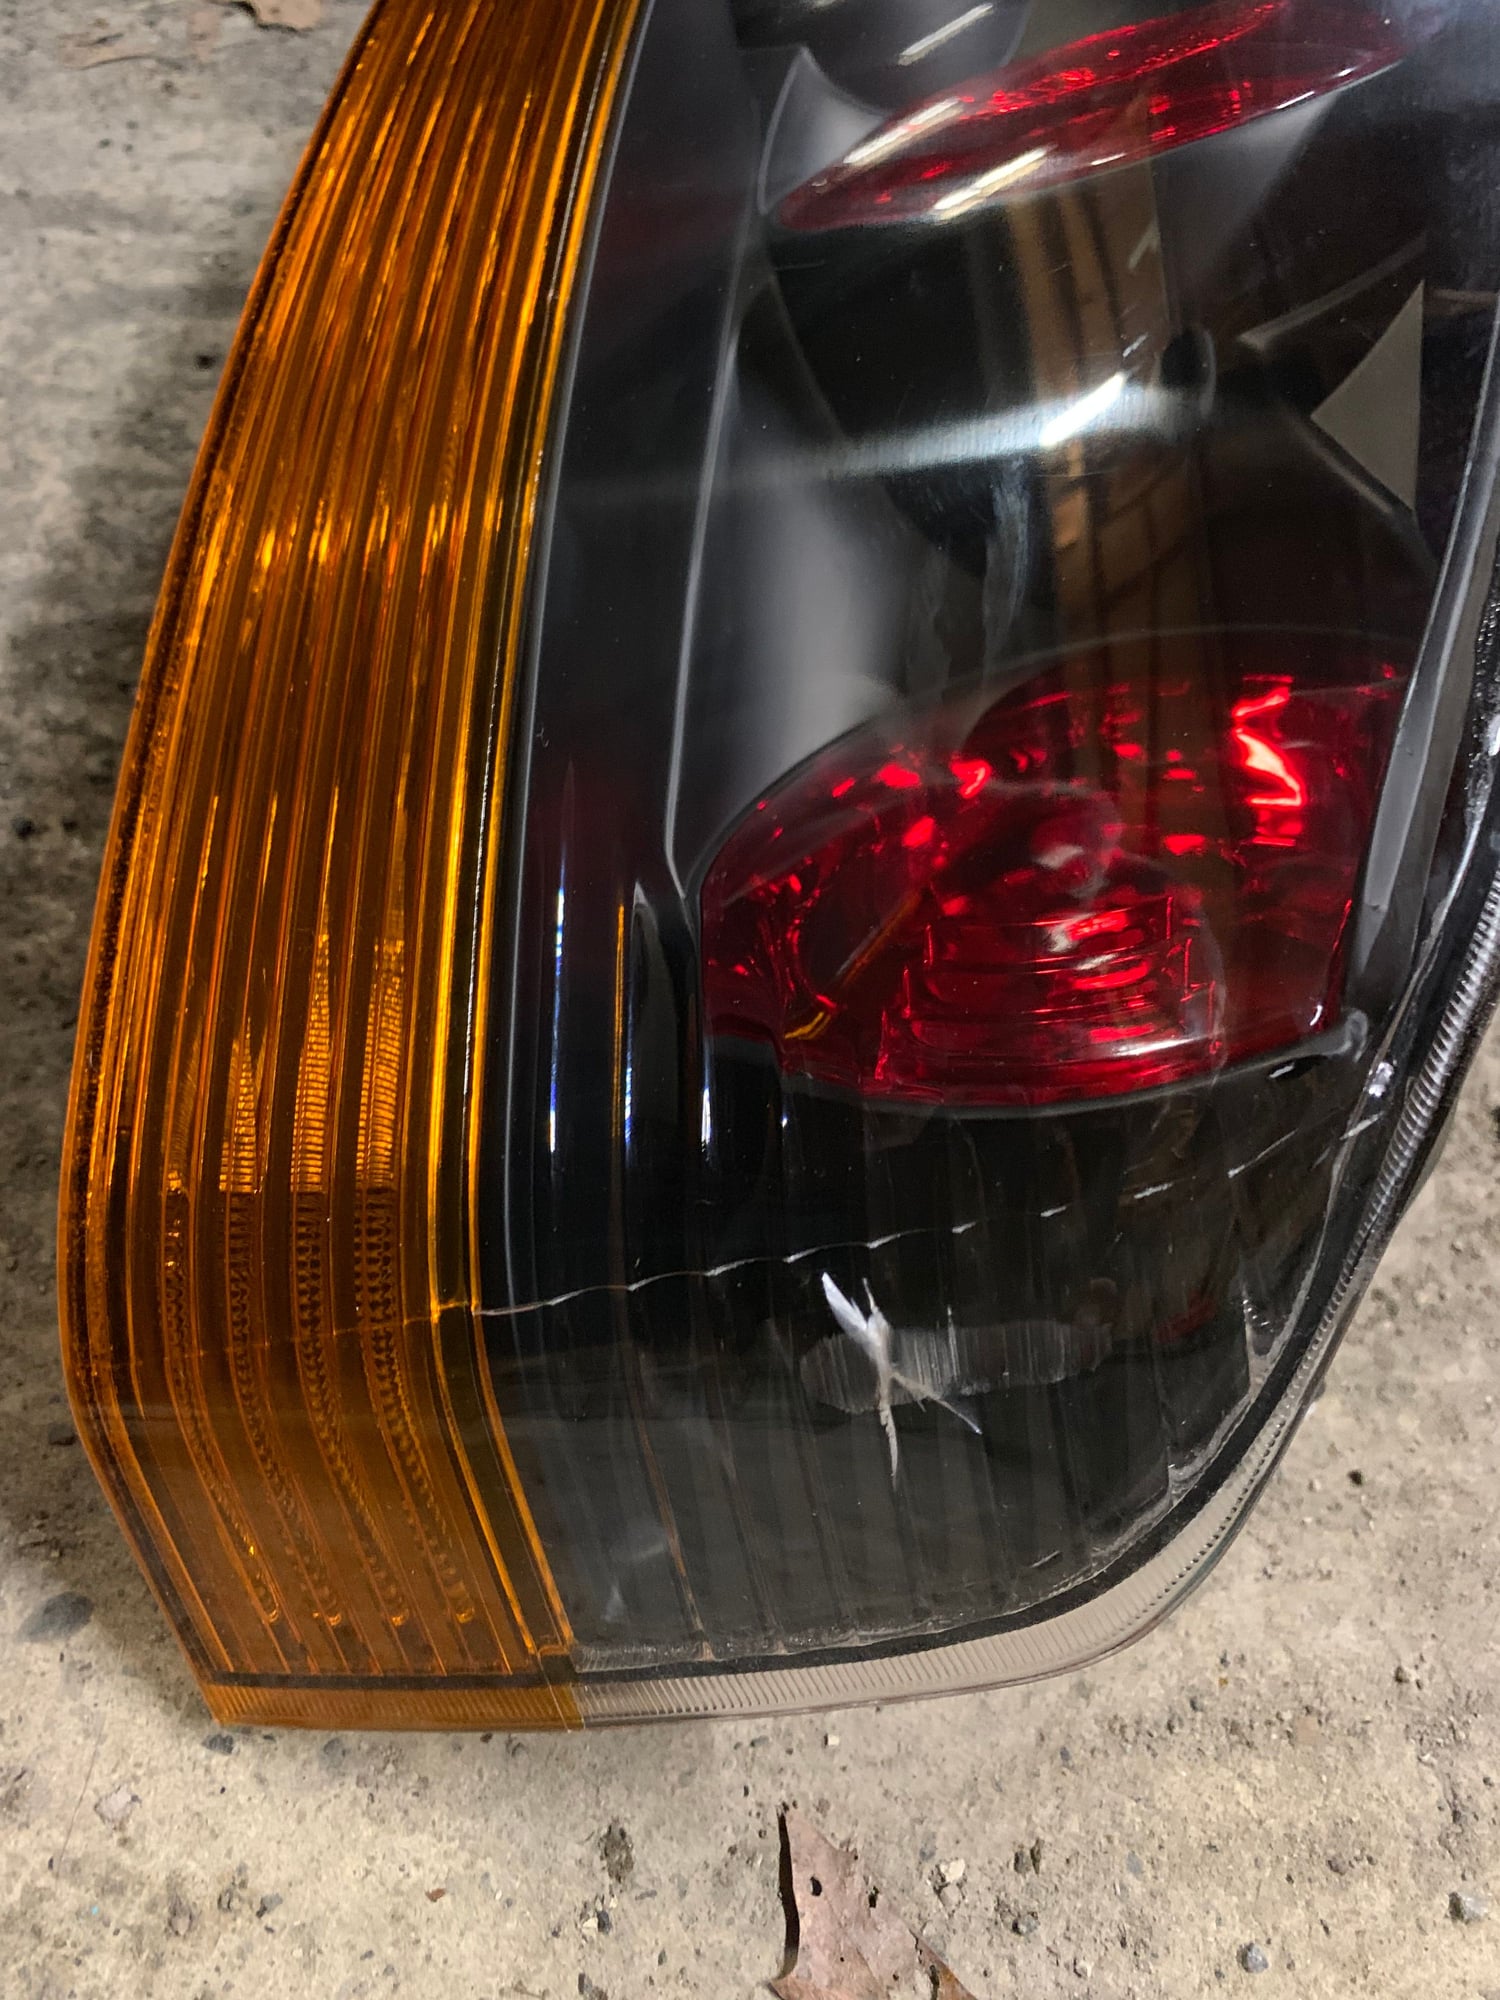 Lights - FS: DEPO Rear Taillights (2 sets) - Used - 2002 to 2006 Mitsubishi Lancer Evolution - East Stroudsburg, PA 18302, United States